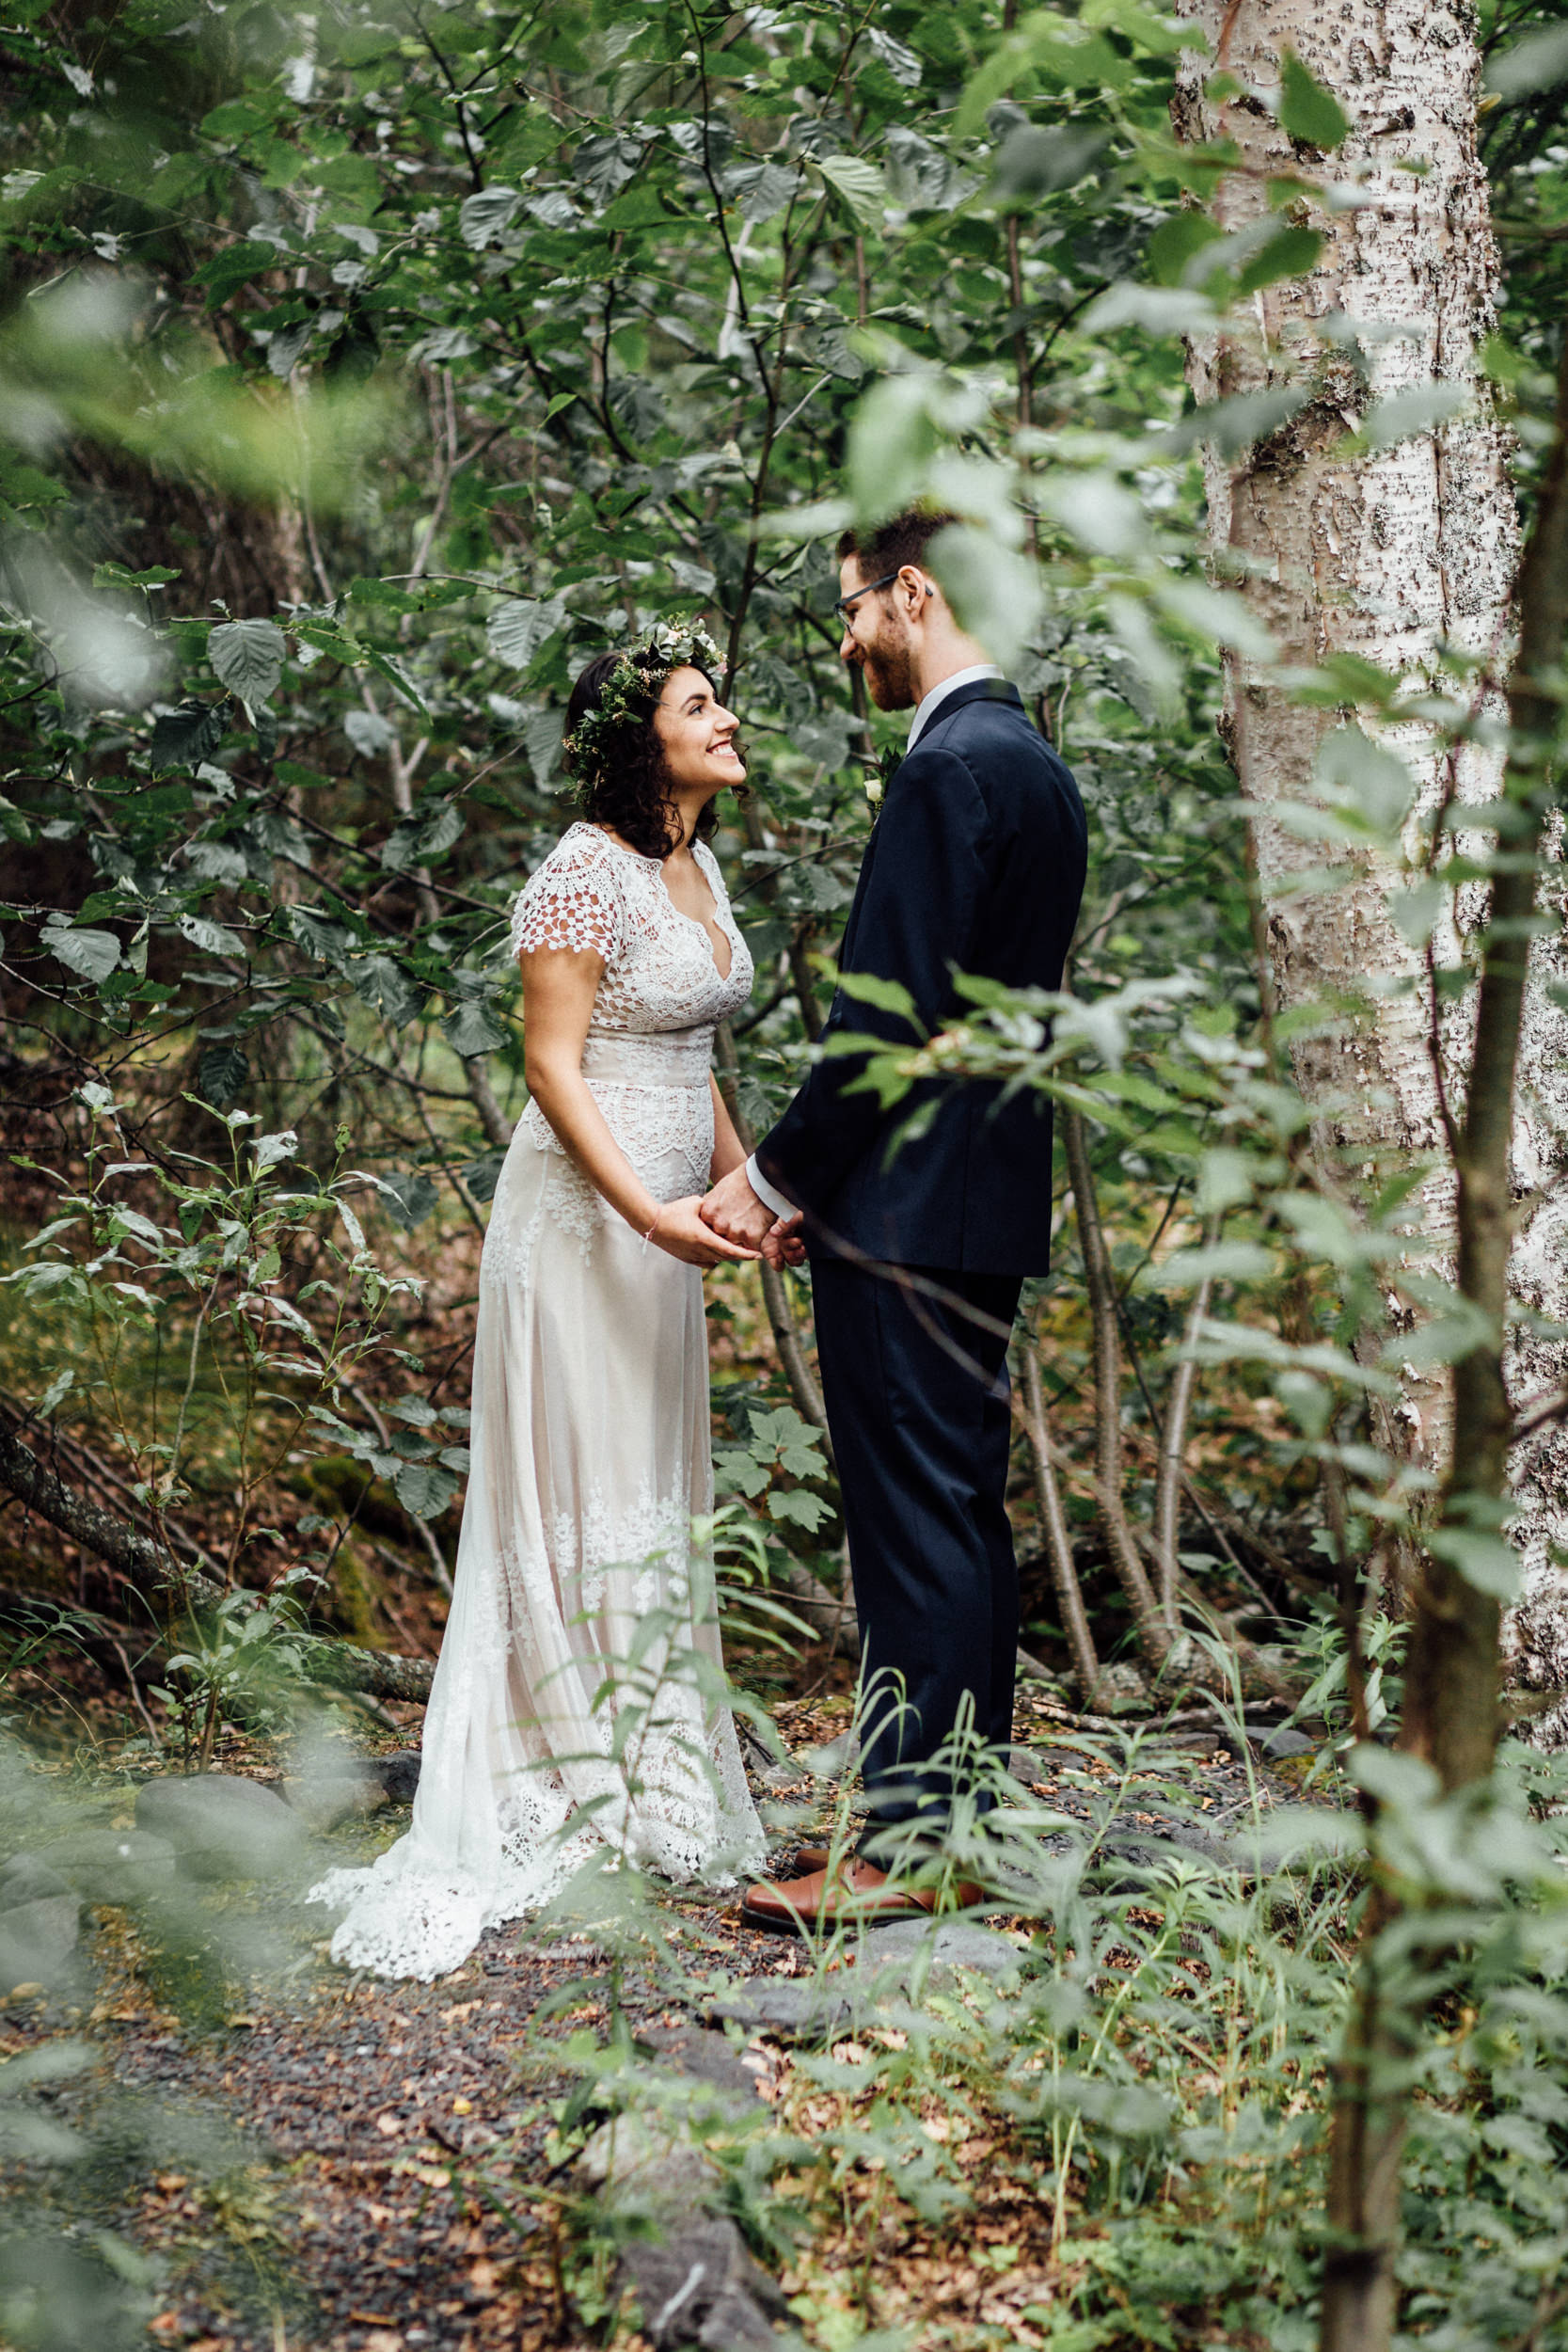 Sweet moment between couple in Cooper Landing forest